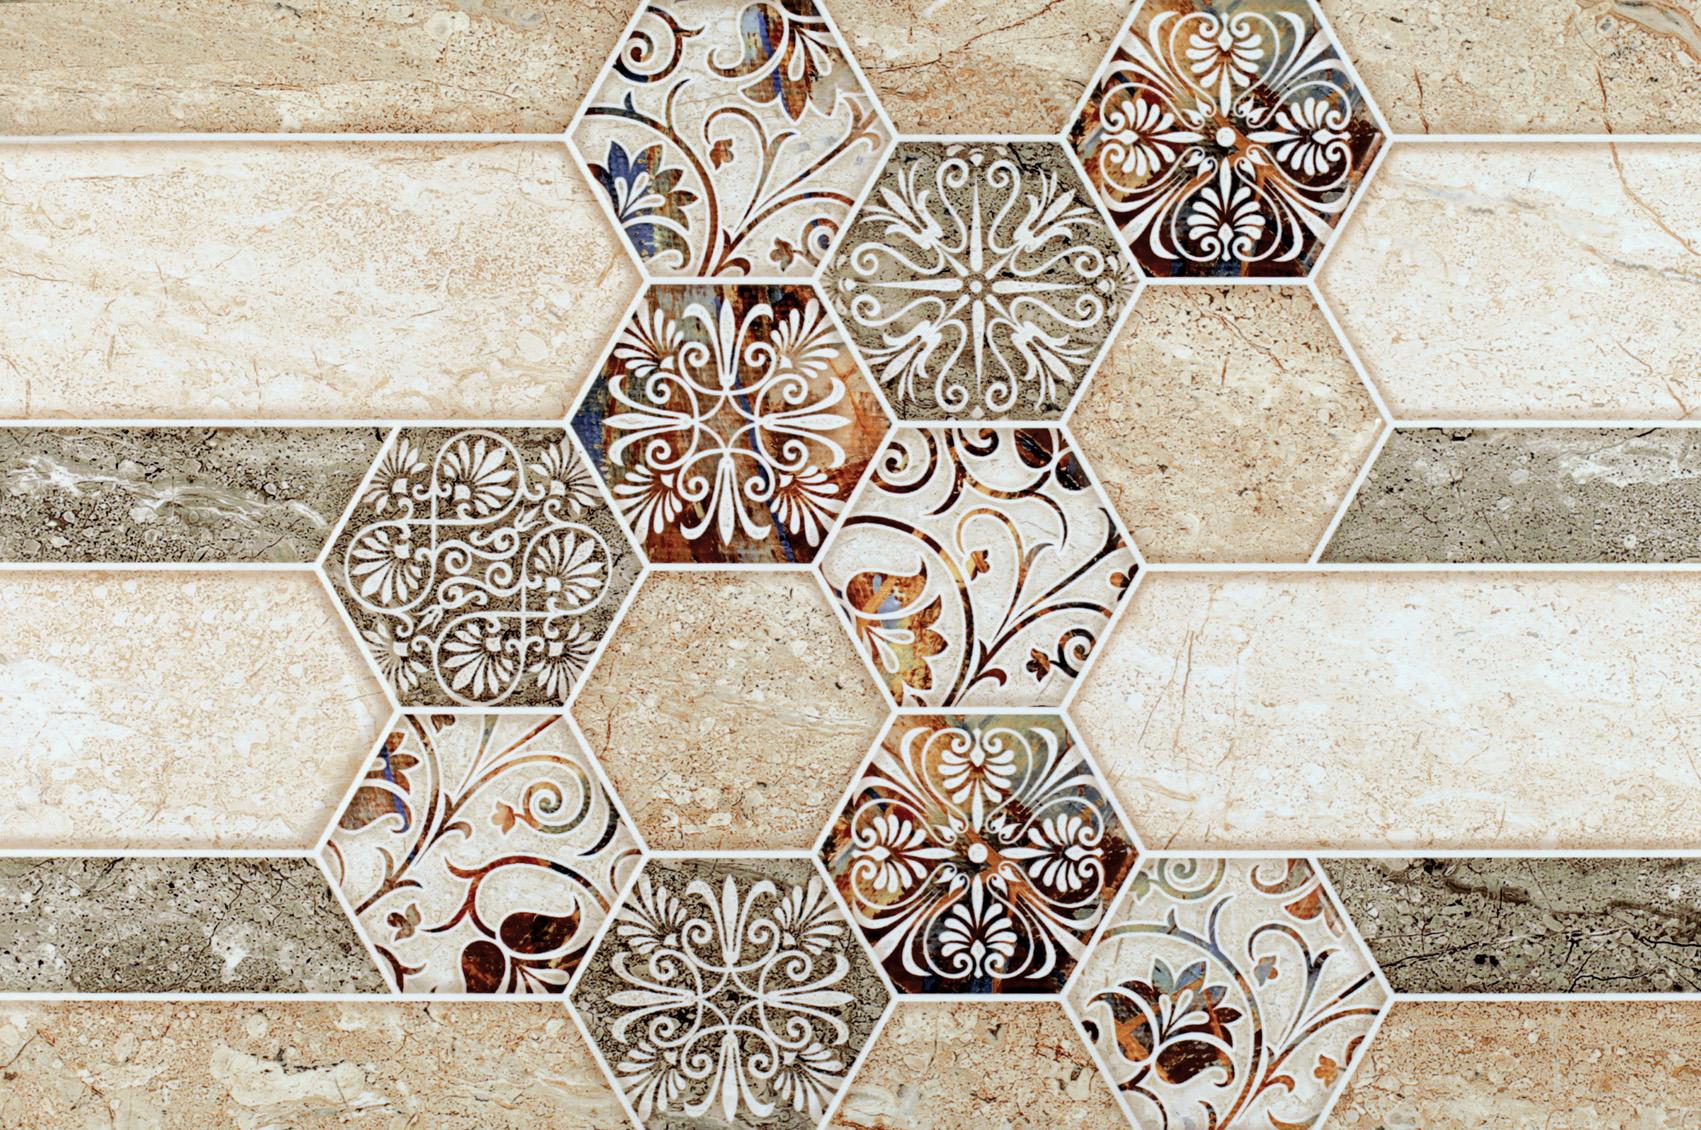 300x450 Tiles for Bathroom Tiles, Kitchen Tiles, Accent Tiles